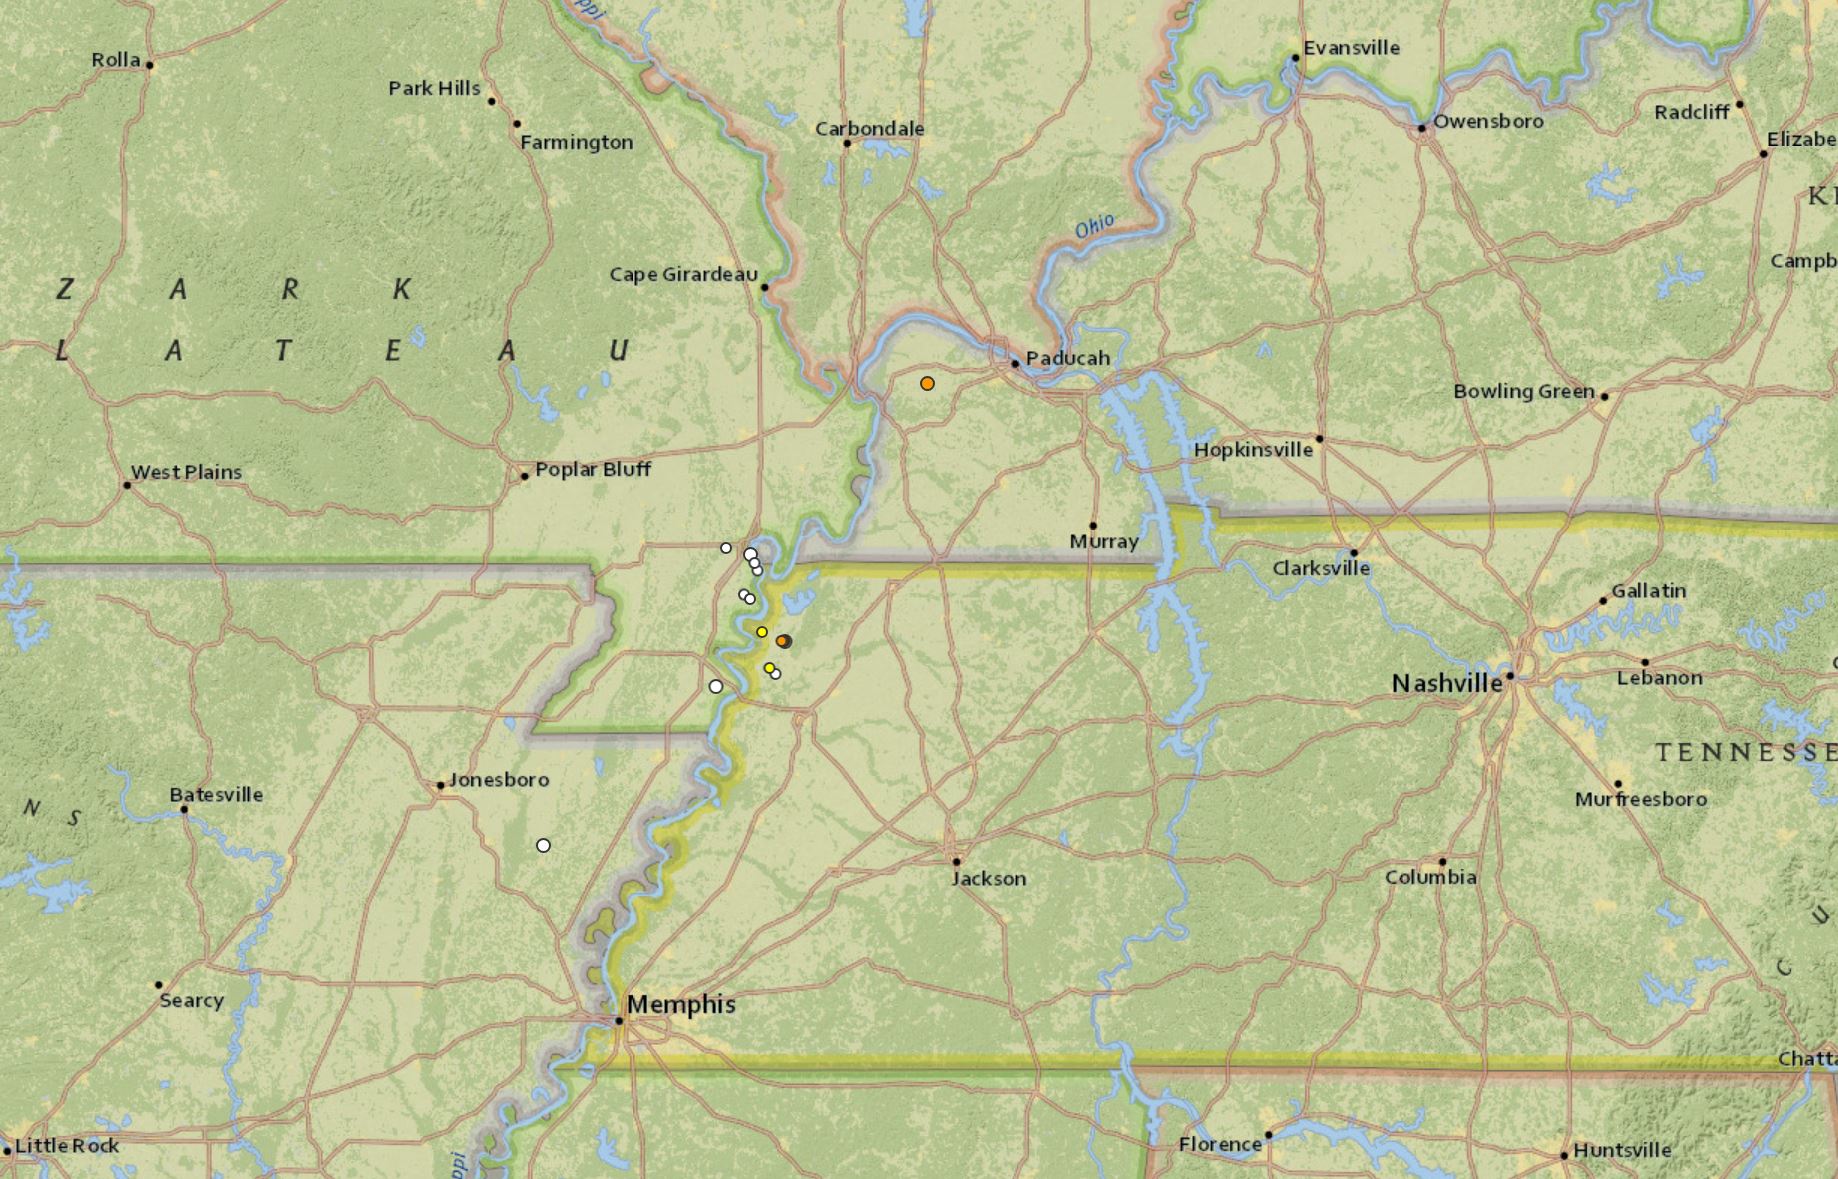 Western Kentucky hit by small earthquake | whas11.com1838 x 1179